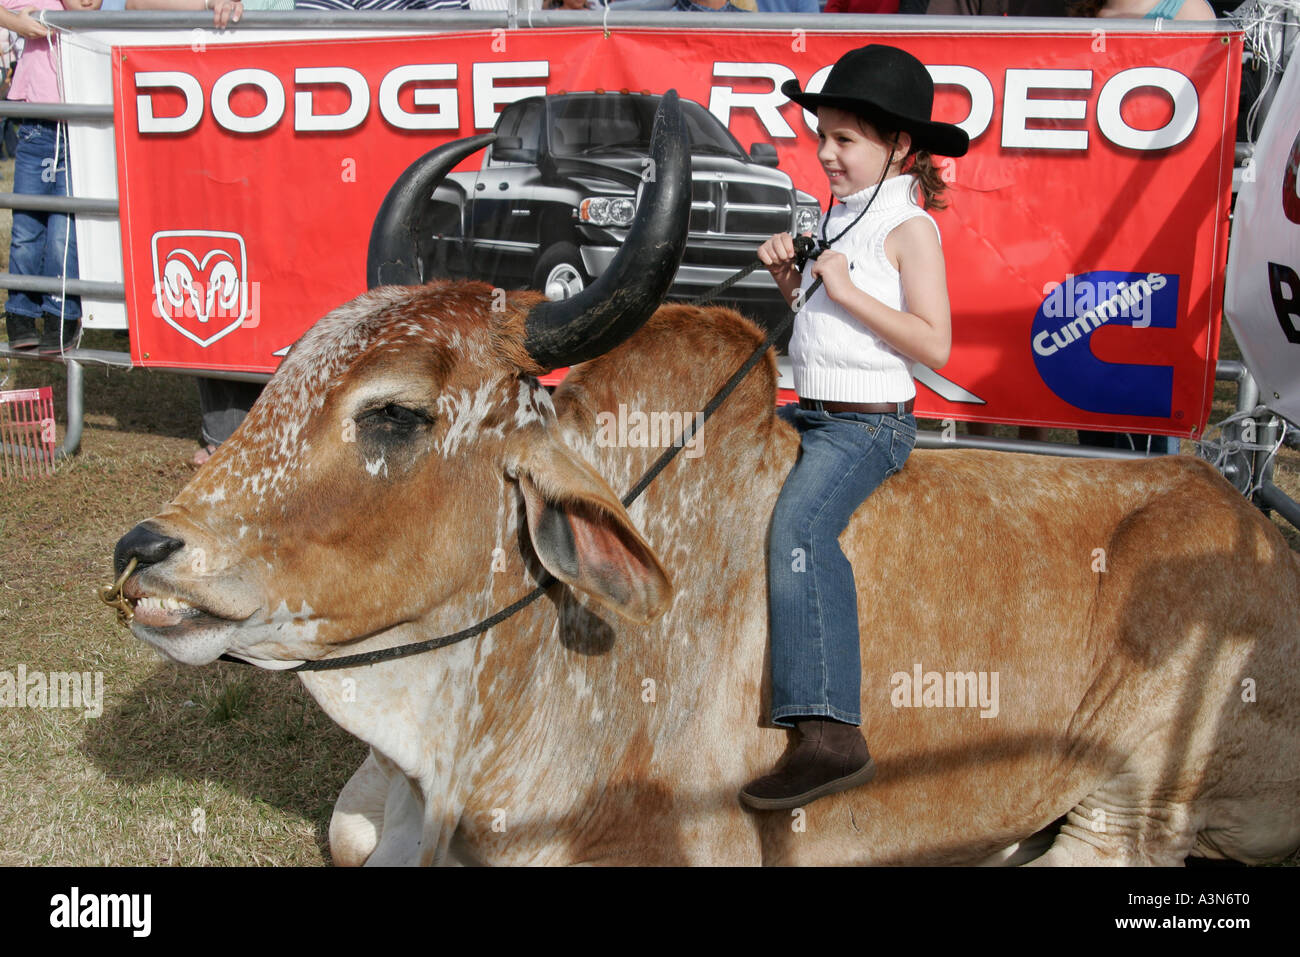 amateur rodeo saddle cow riding